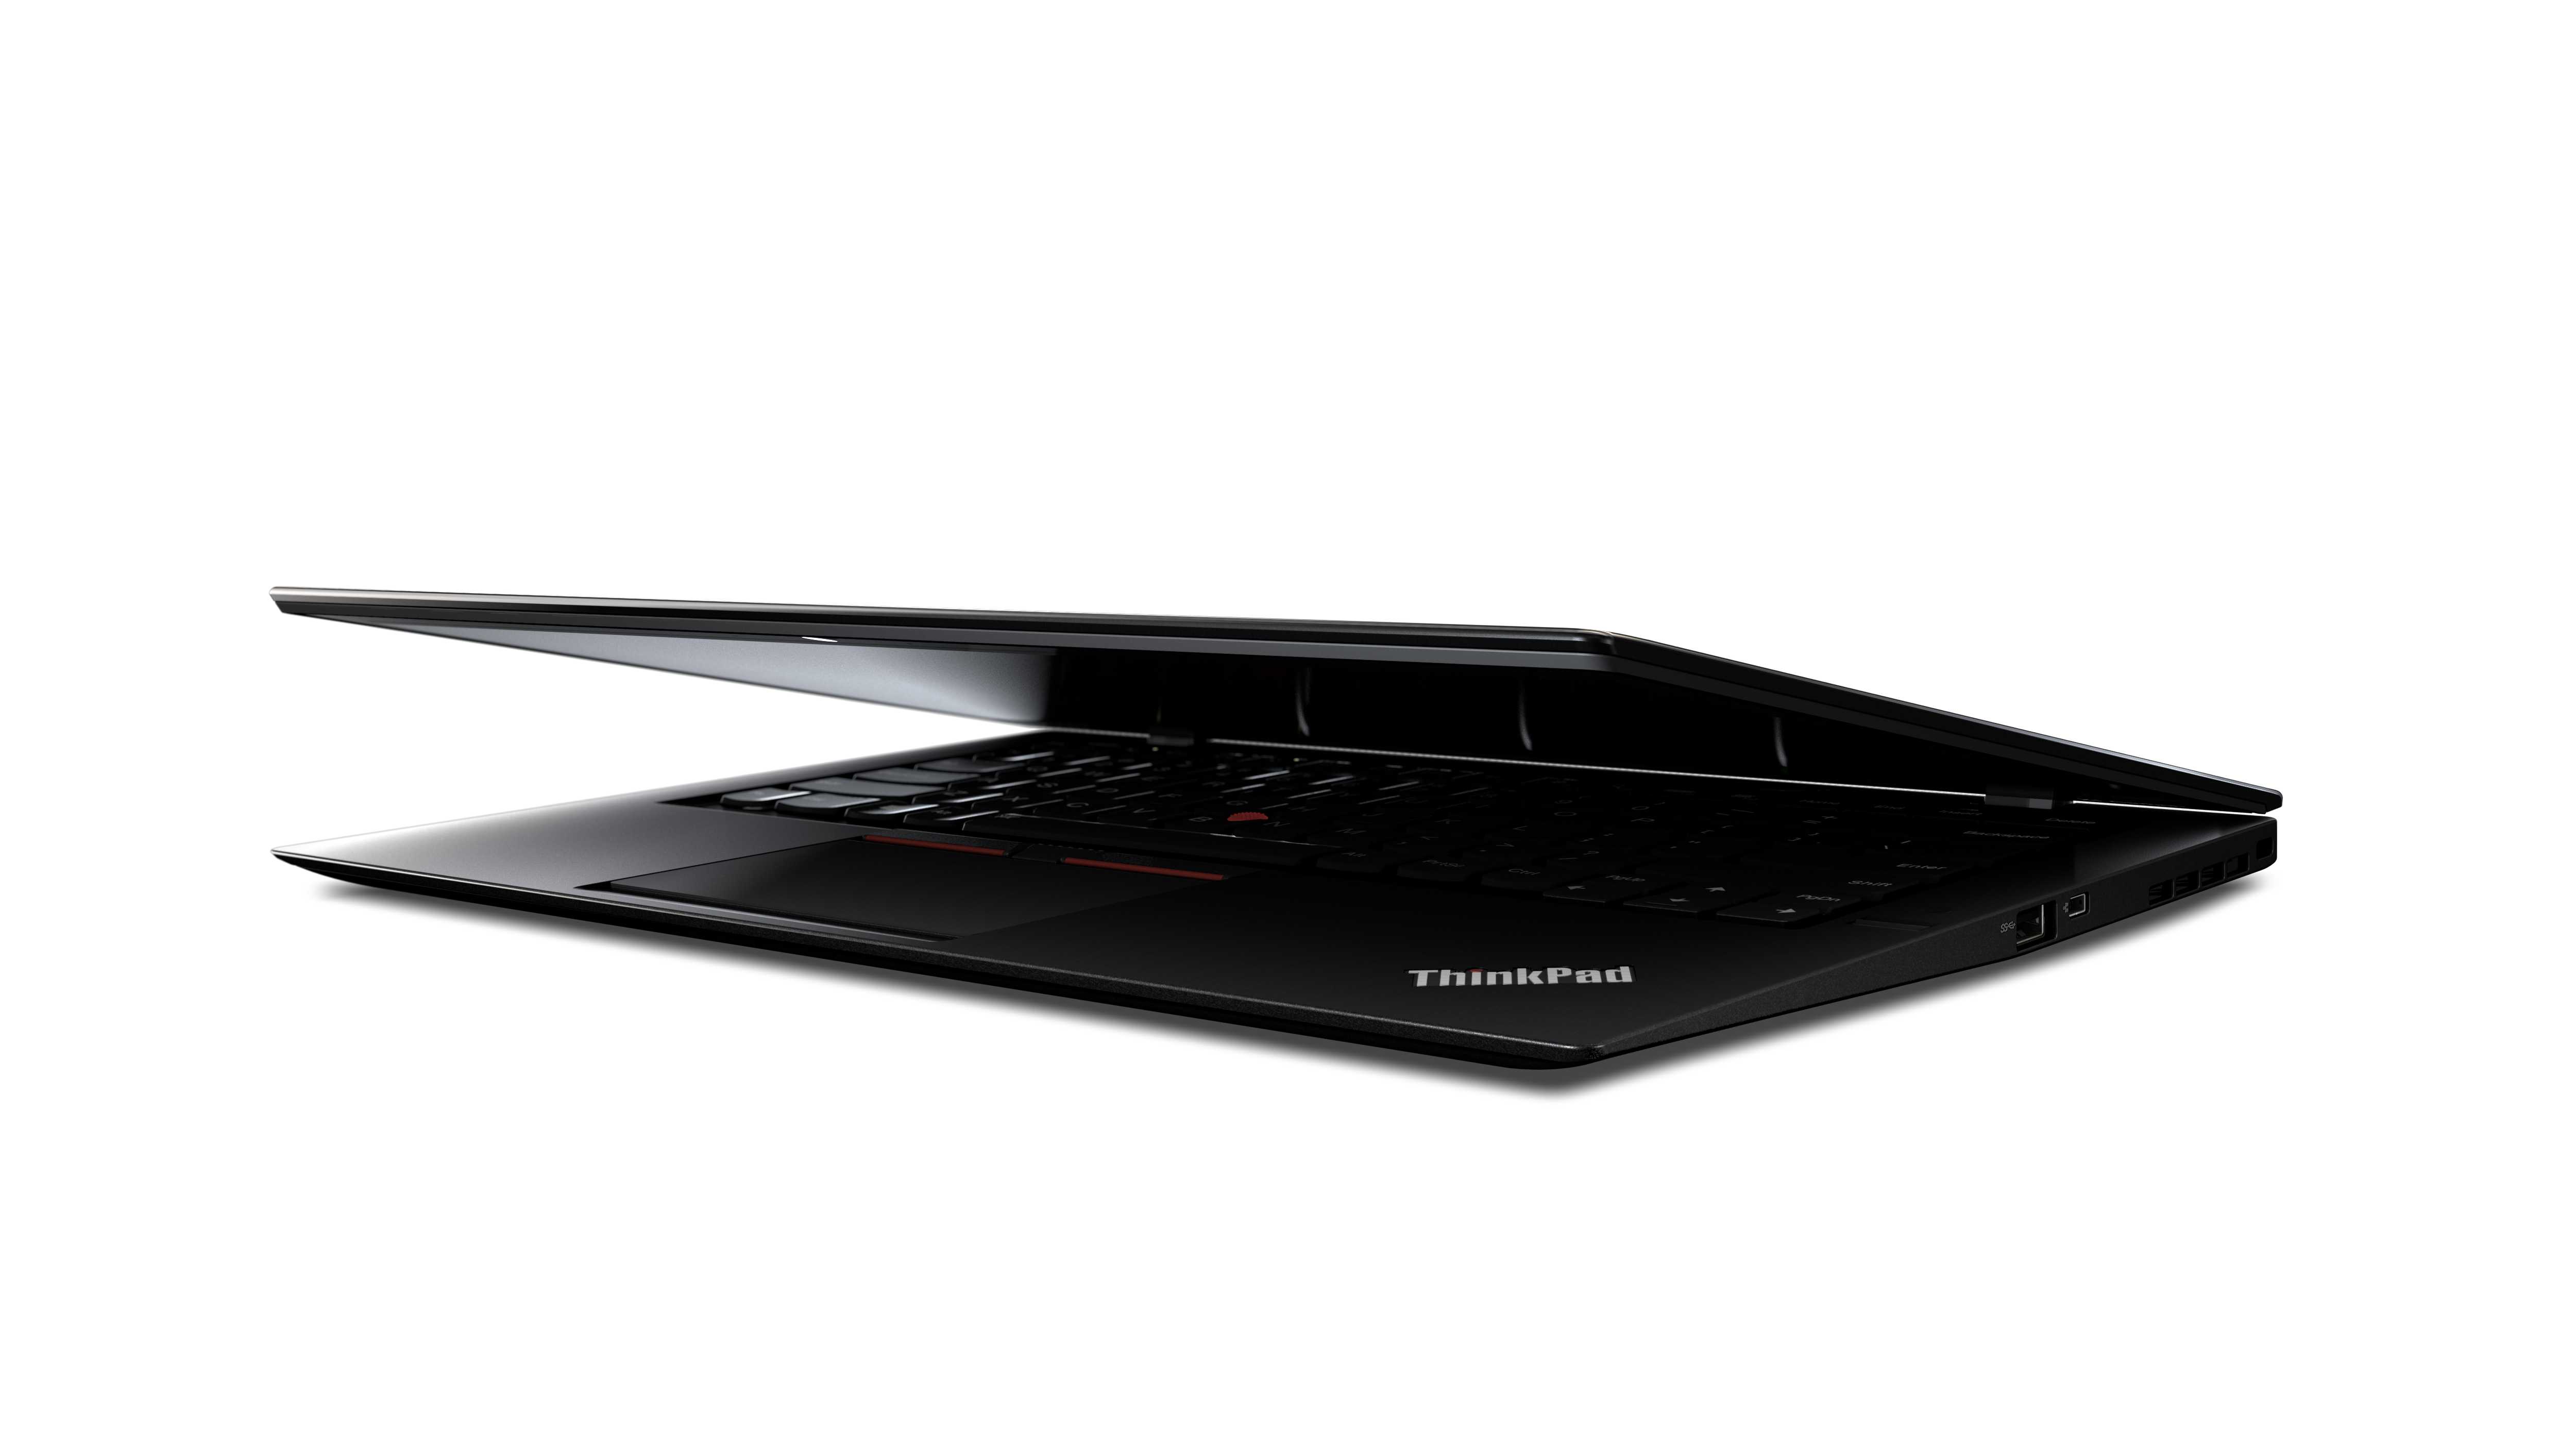 Lenovo ThinkPad X1 Carbon 2015 Video & Details